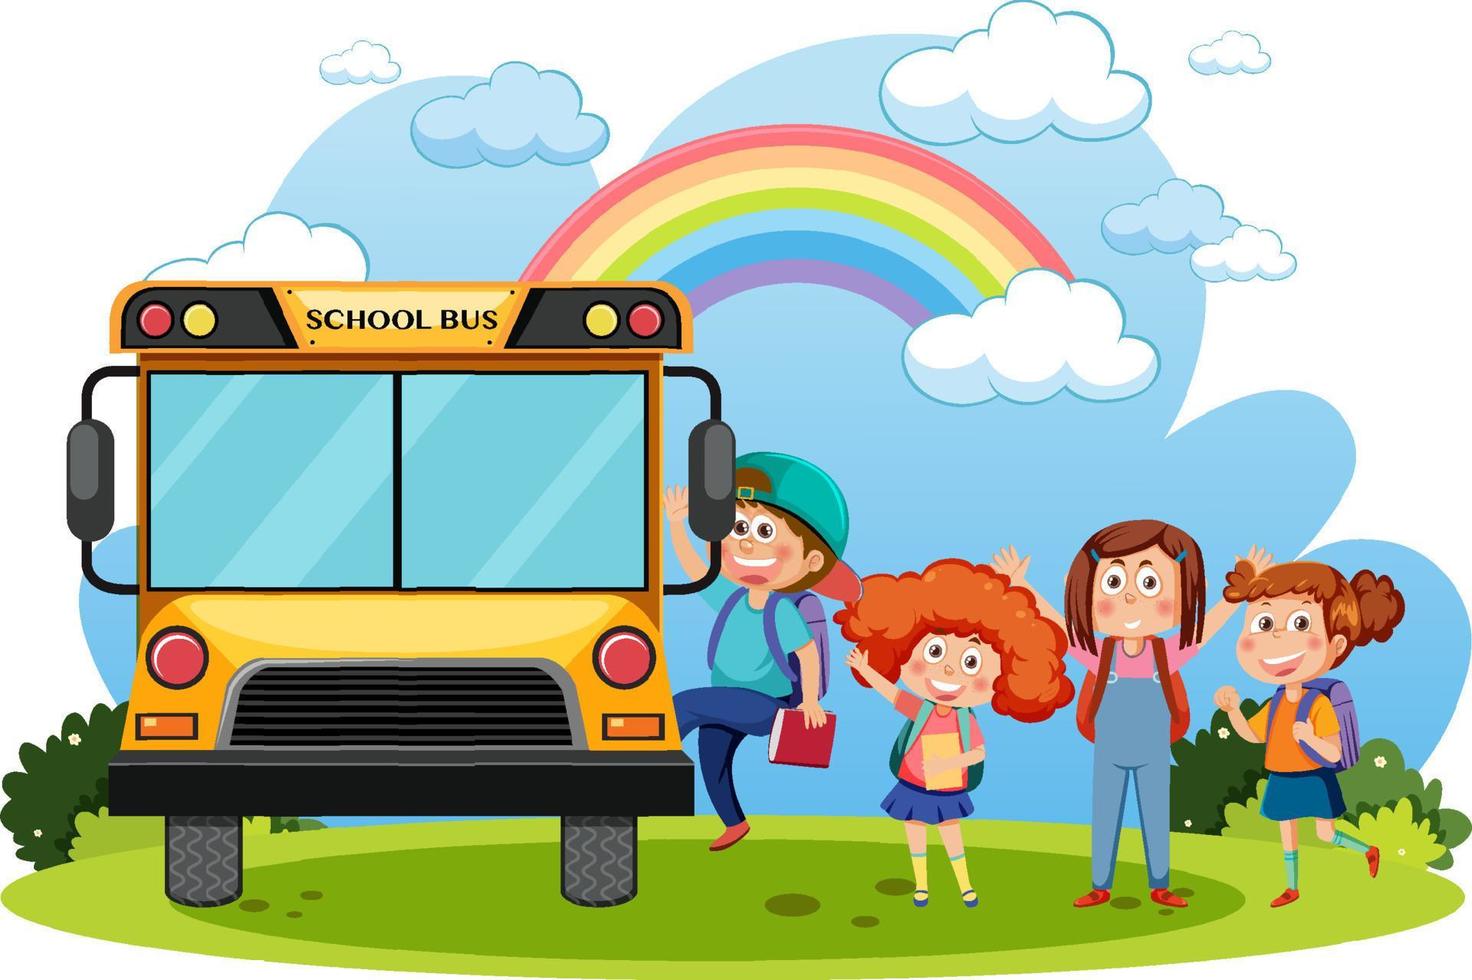 School bus with students cartoon vector